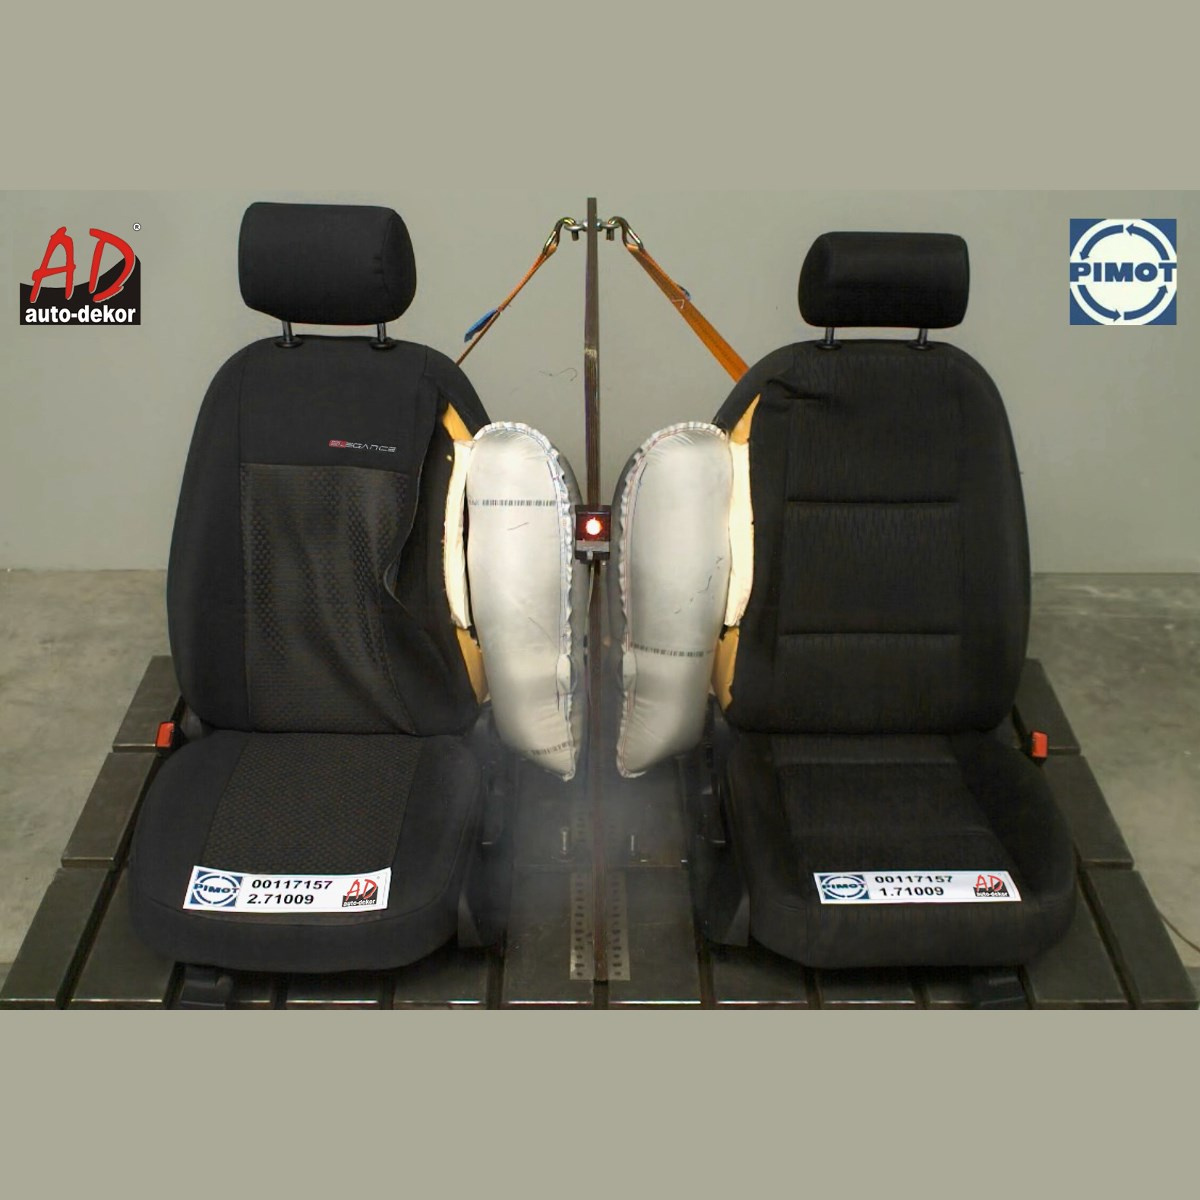 Sitzbezüge Opel Vivaro C Sitzbezüge PEUGEOT Expert III Front, 62,90 €